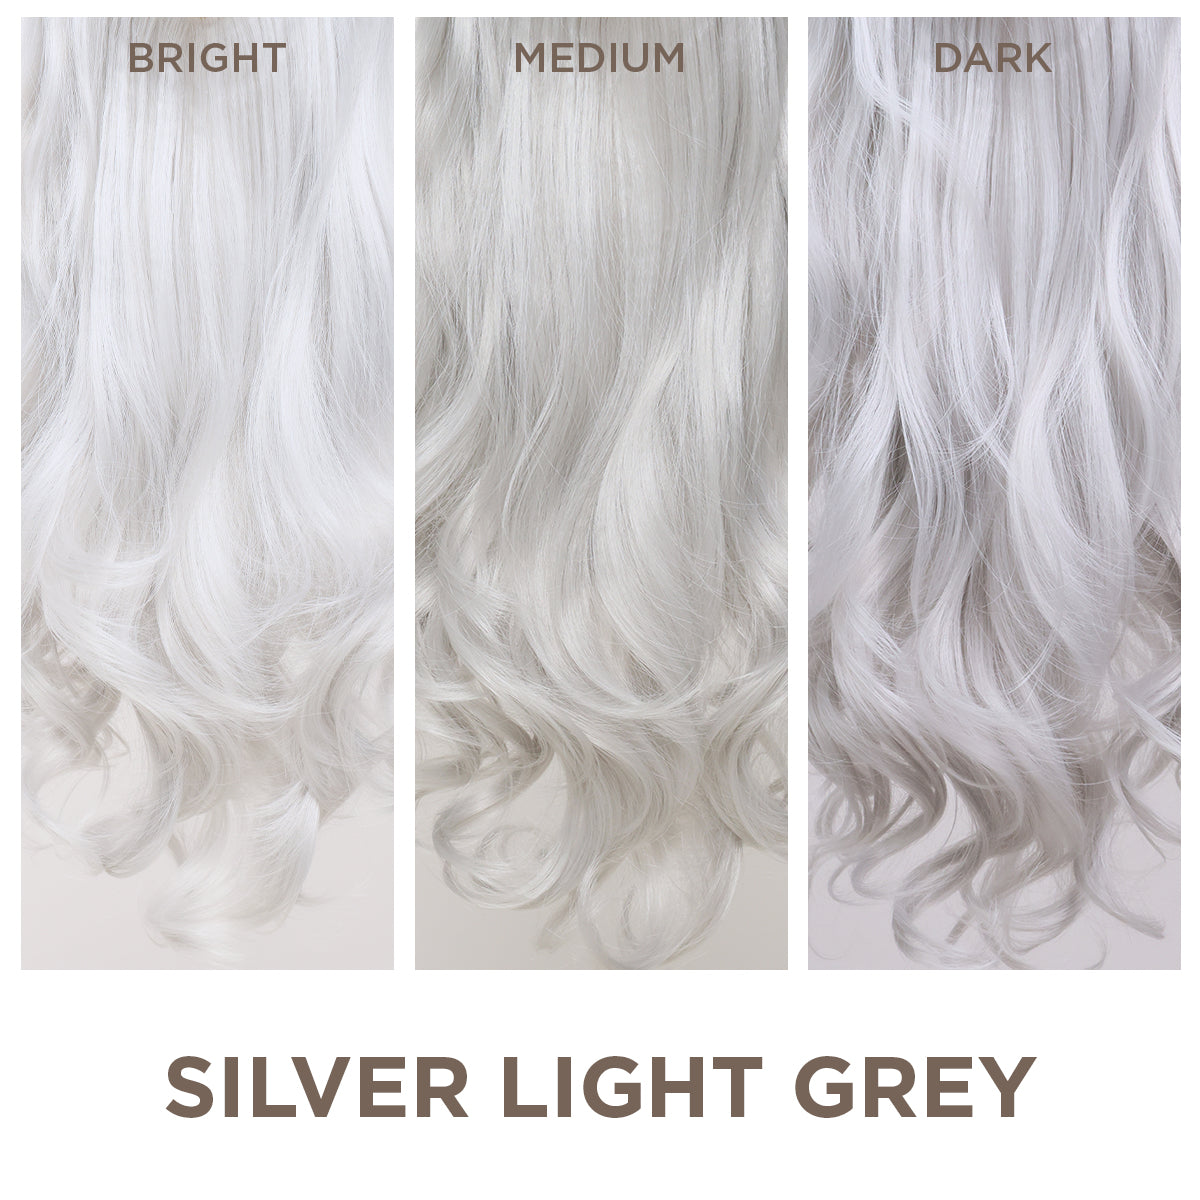 Silver Light Grey